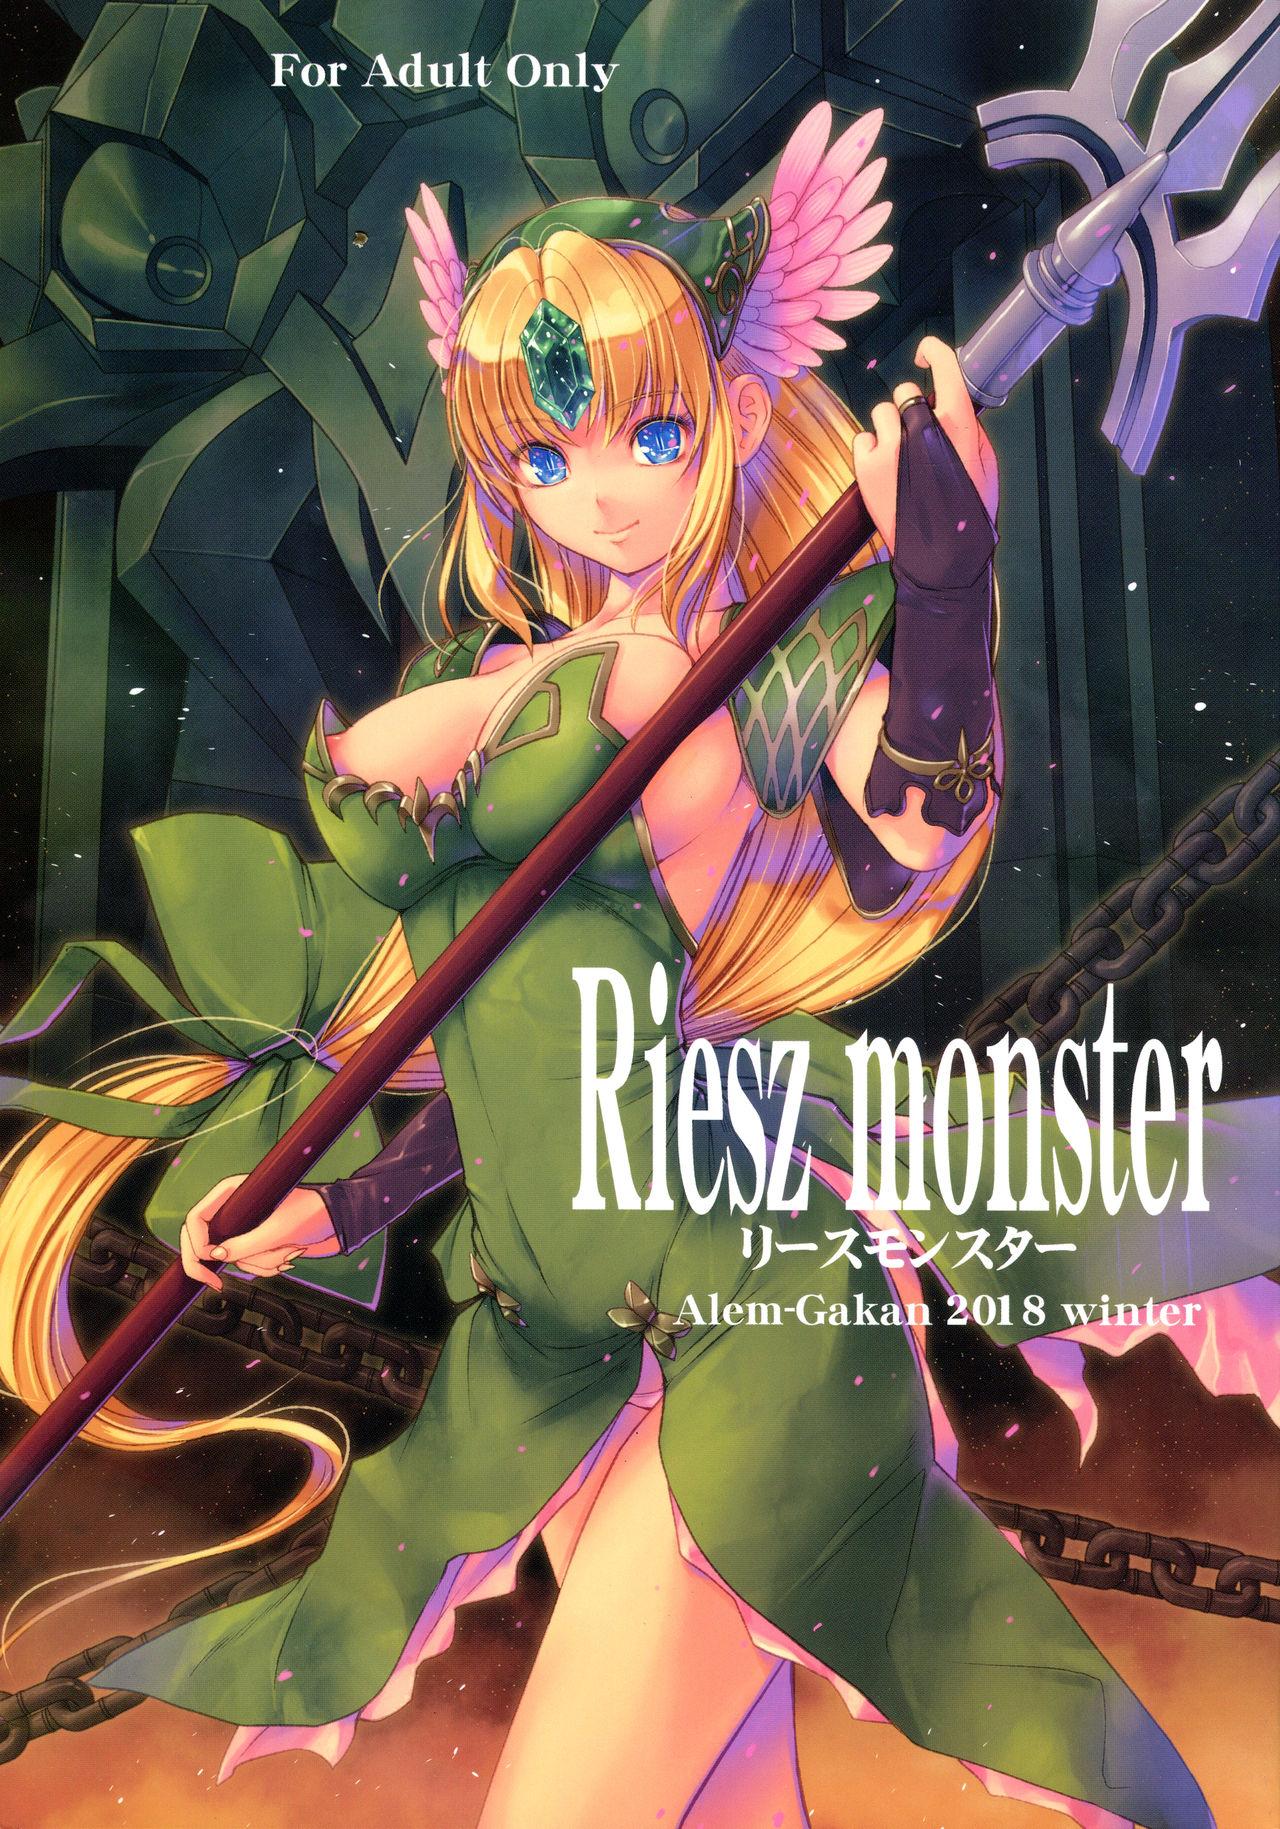 Classroom Riesz monster - Seiken densetsu 3 Cogida - Page 1